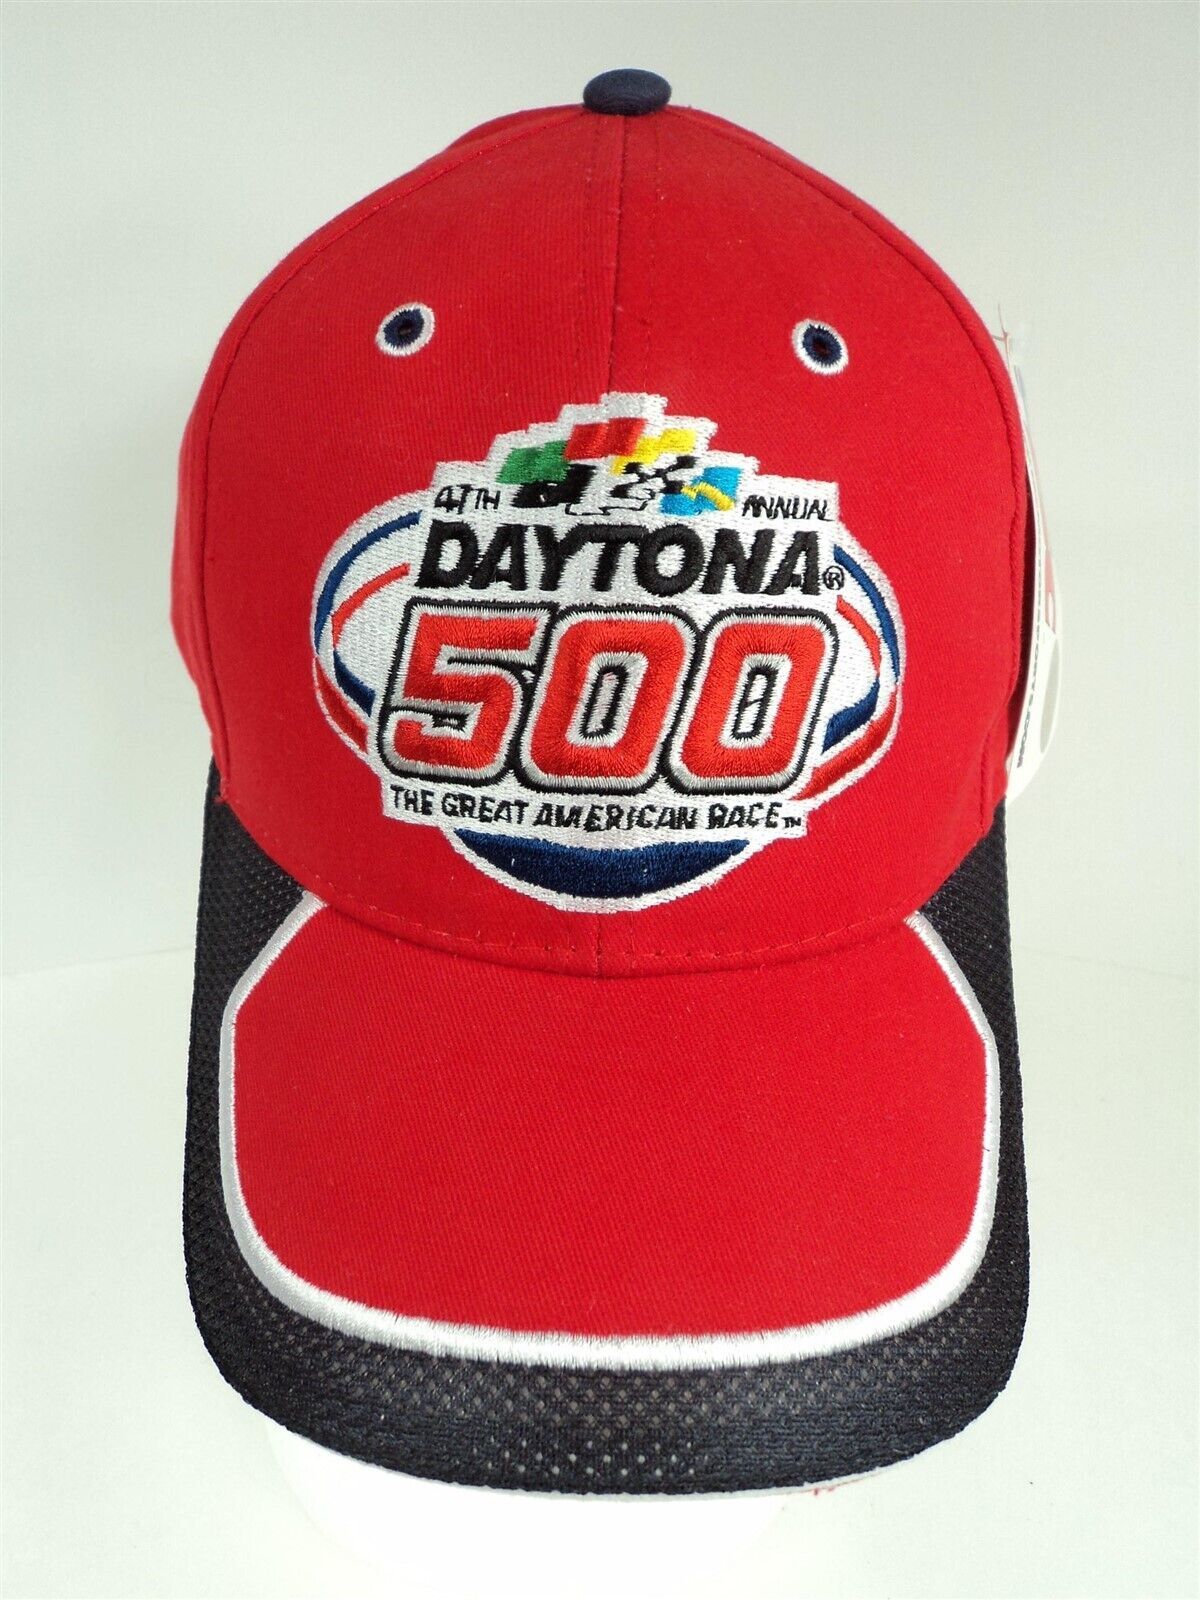 Primary image for 2005 47th Annual Daytona 500 NASCAR Red Strapback Trucker Hat - New!